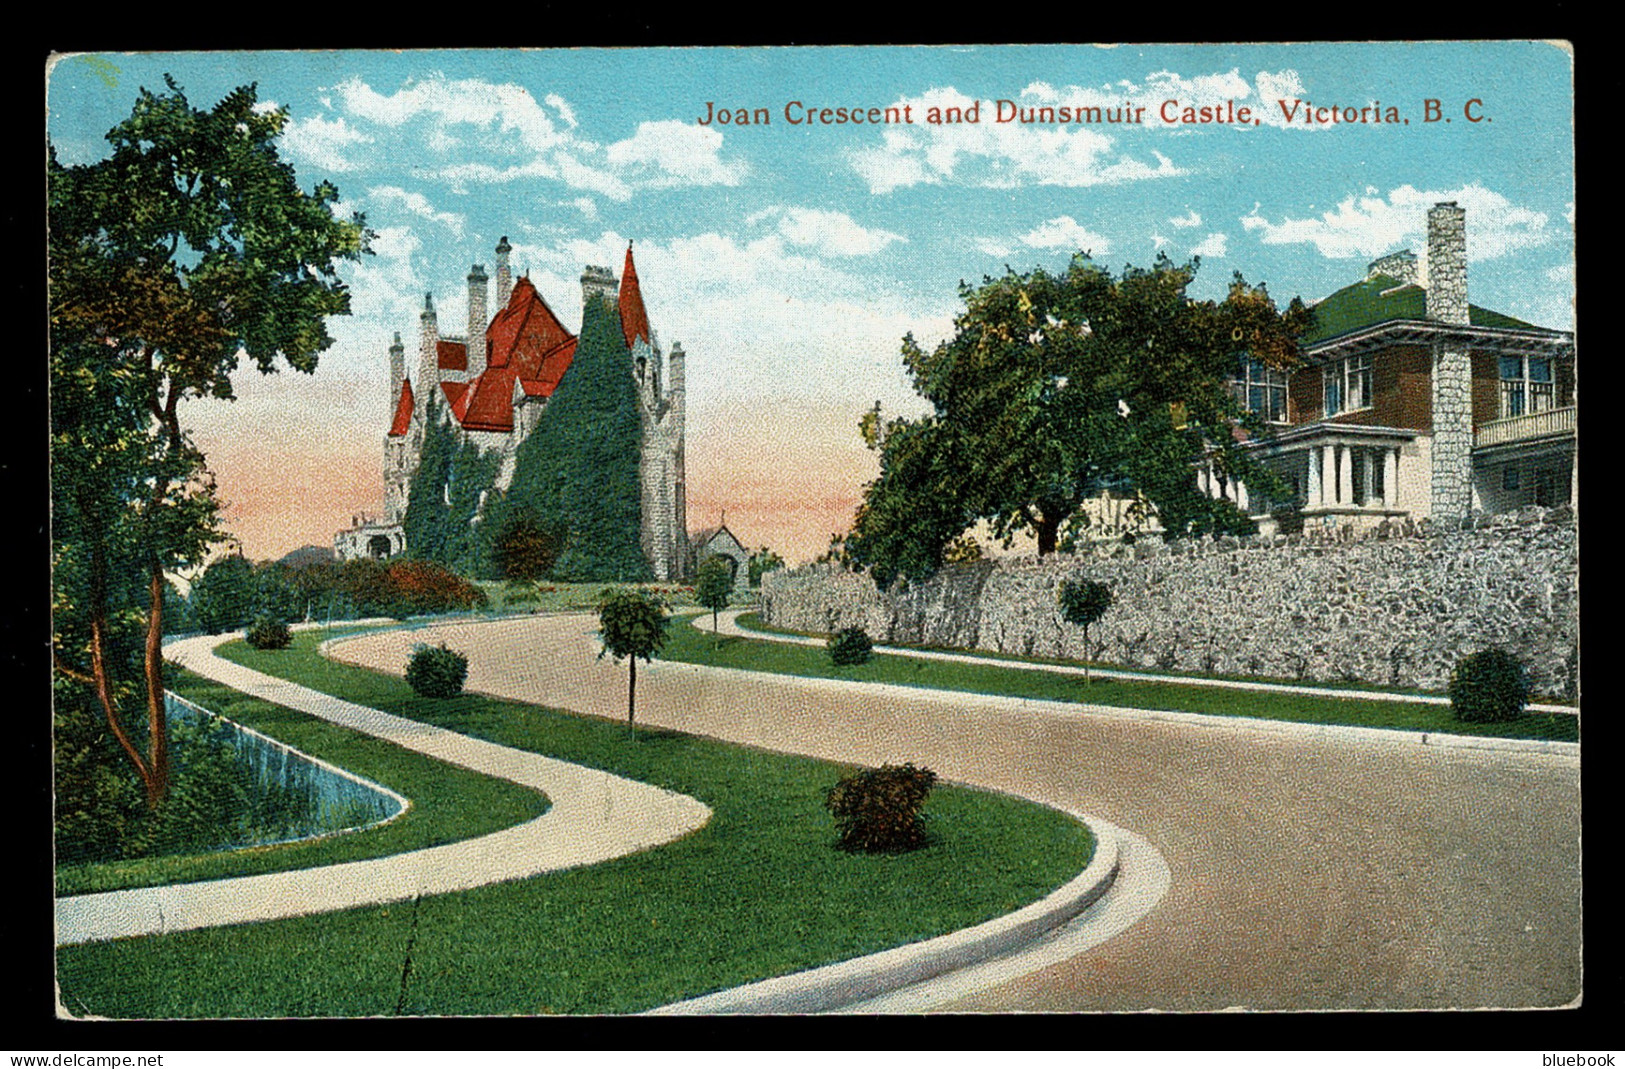 Ref 1621 - Early Postcard - Joan Crescent & Dunsmuir Castle - Victoria Vancouver Island B.C. Canada - Victoria